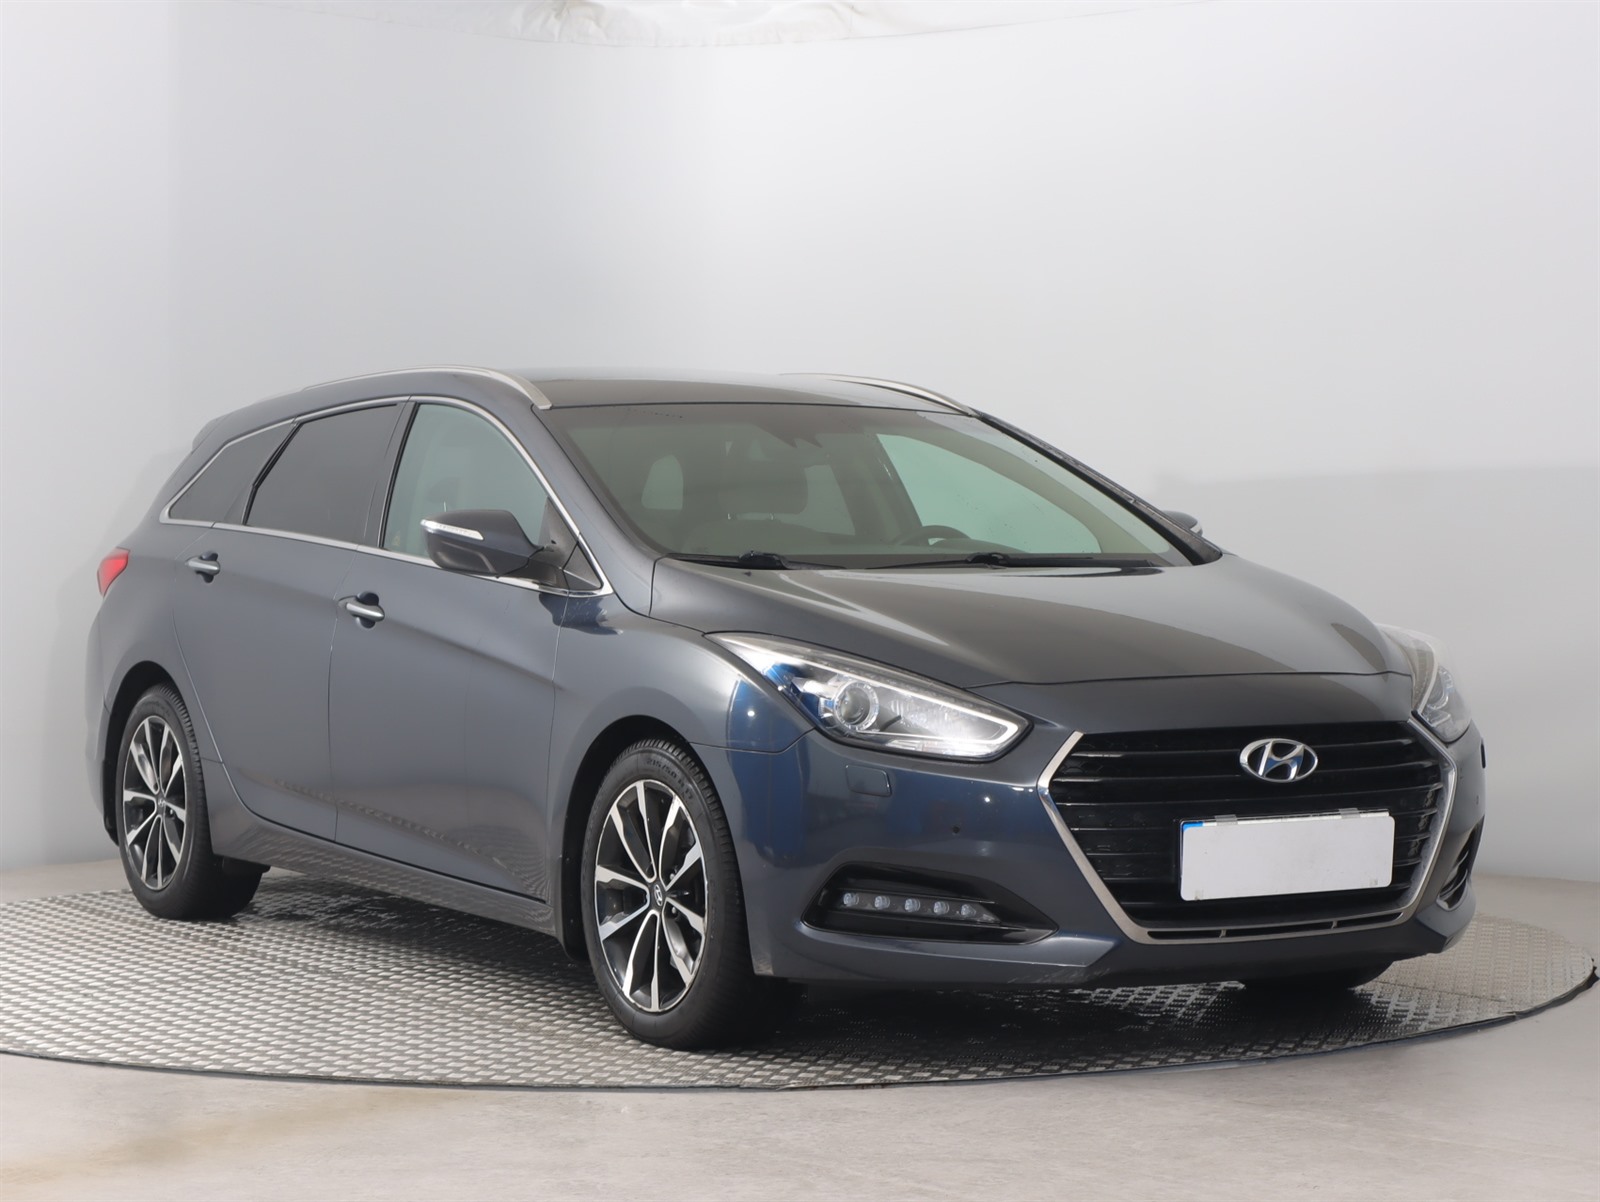 Hyundai i40, 2016 - celkový pohled